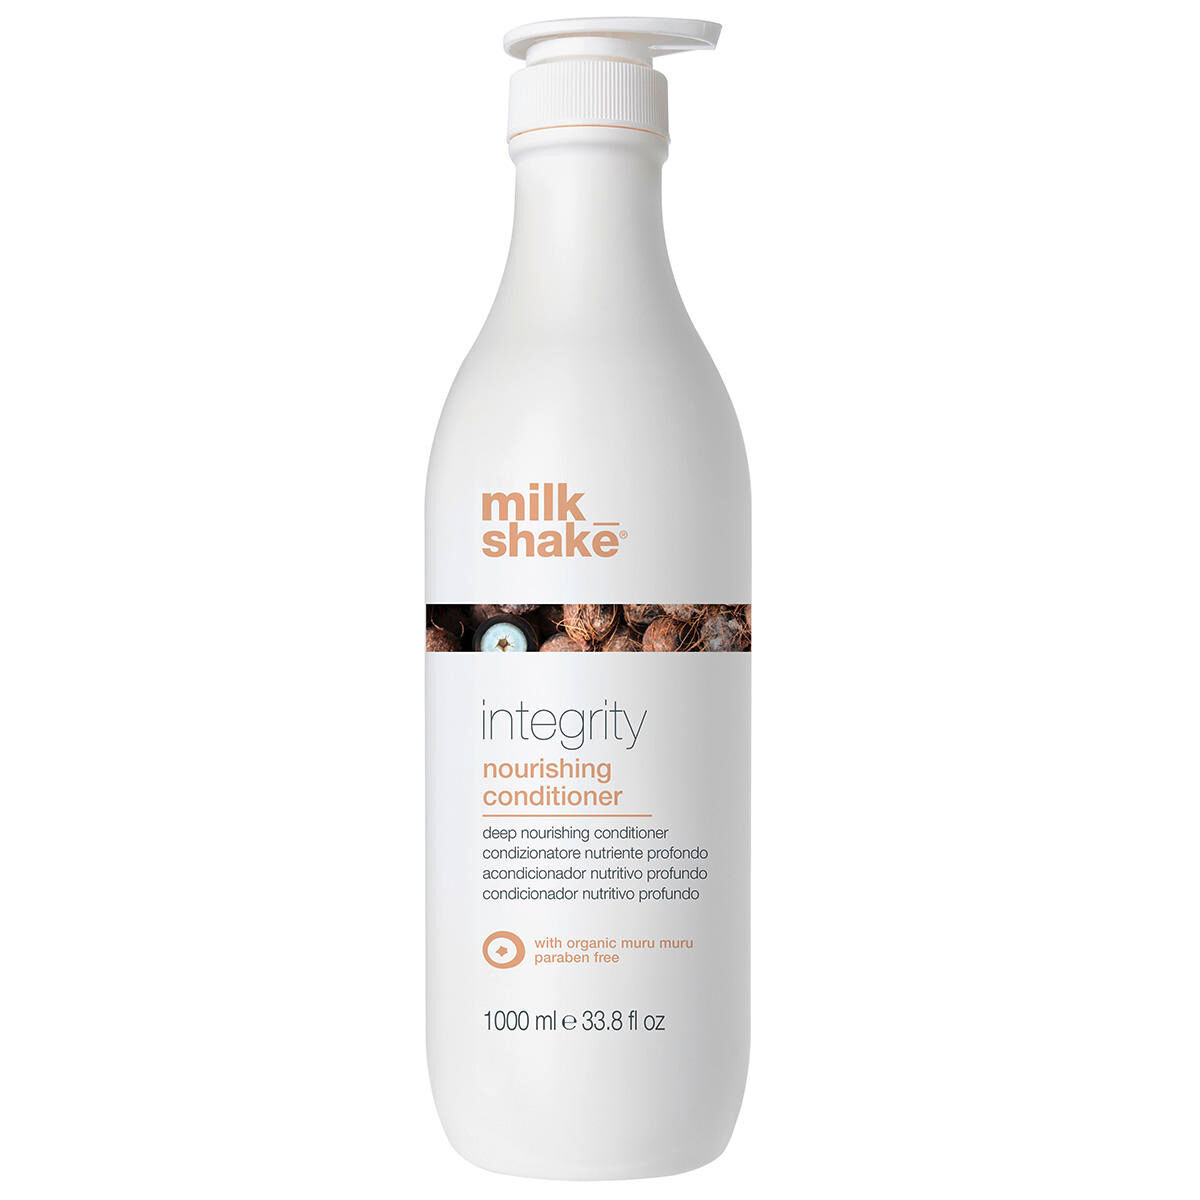 milk_shake integrity nourishing conditioner 1 liter